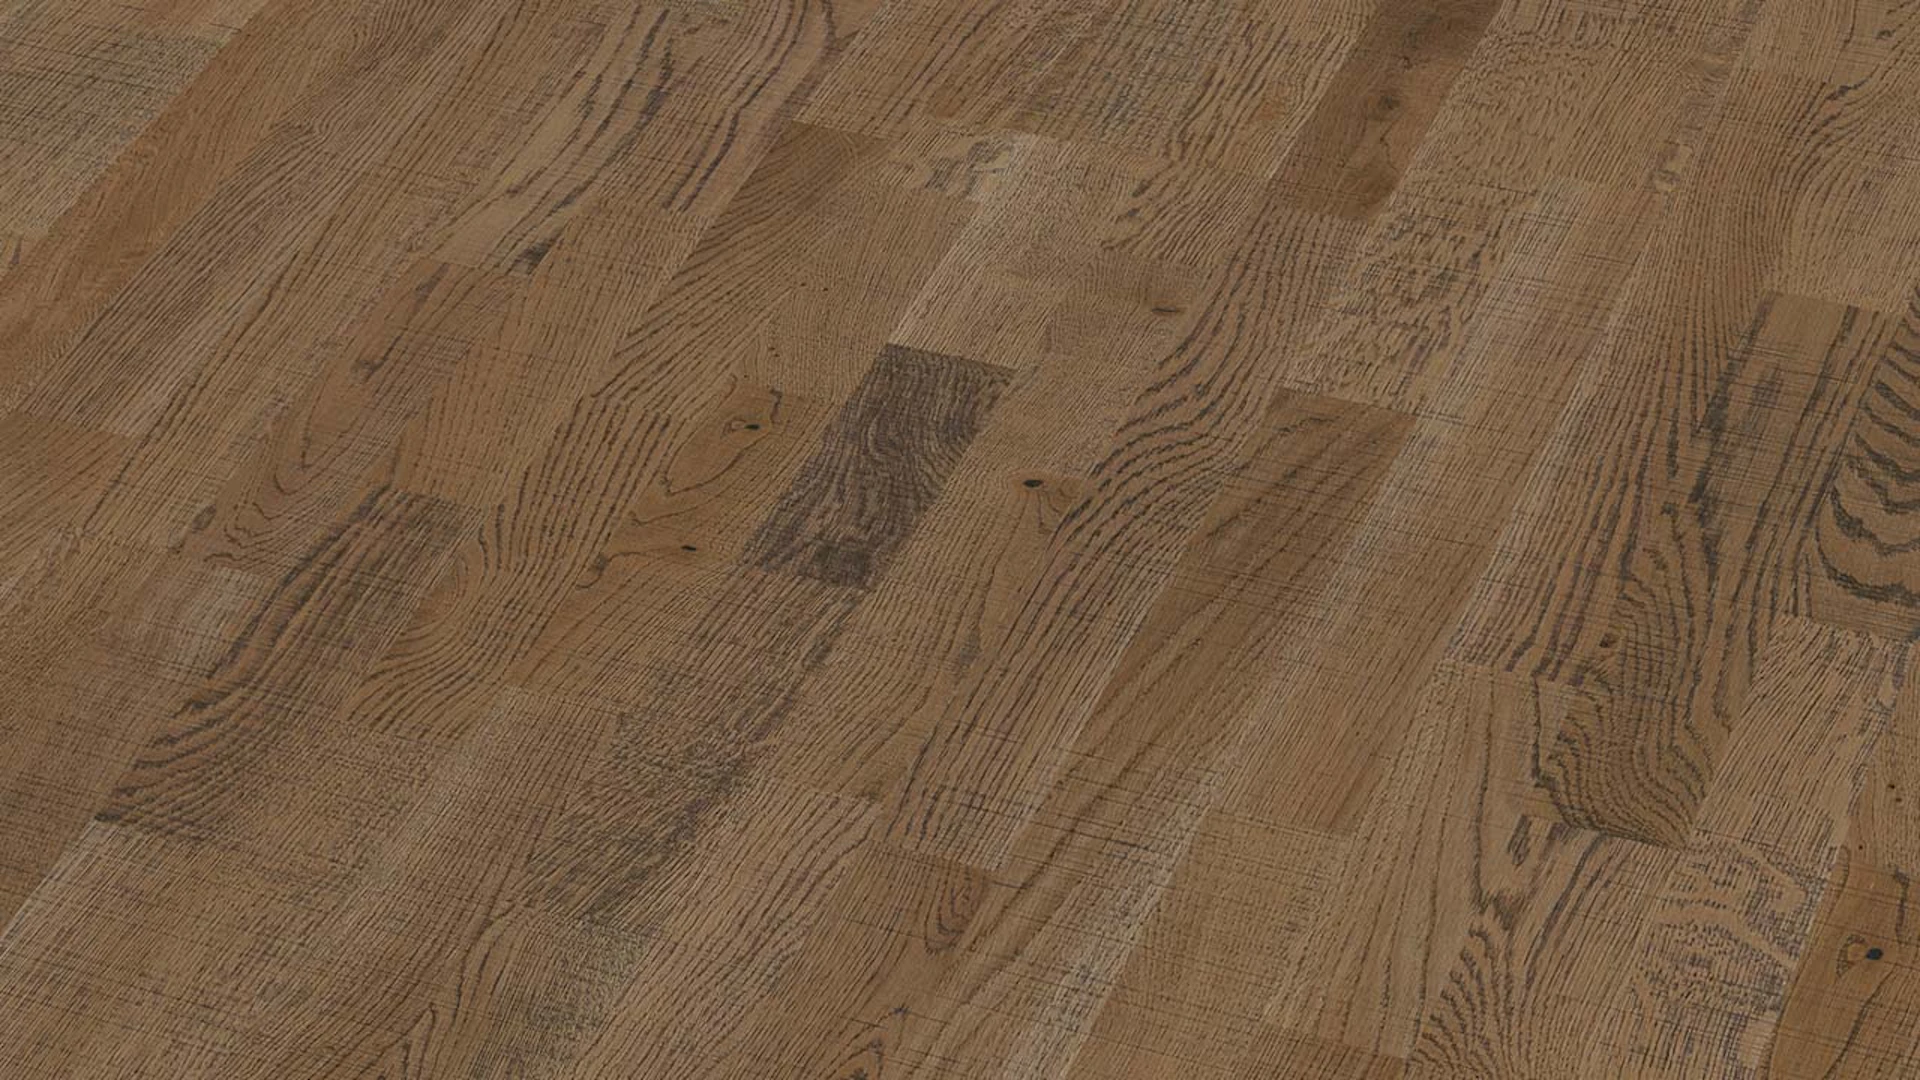 WoodNature Parquet Flooring - Vintage Oak olive gray (PMPC200-0409)